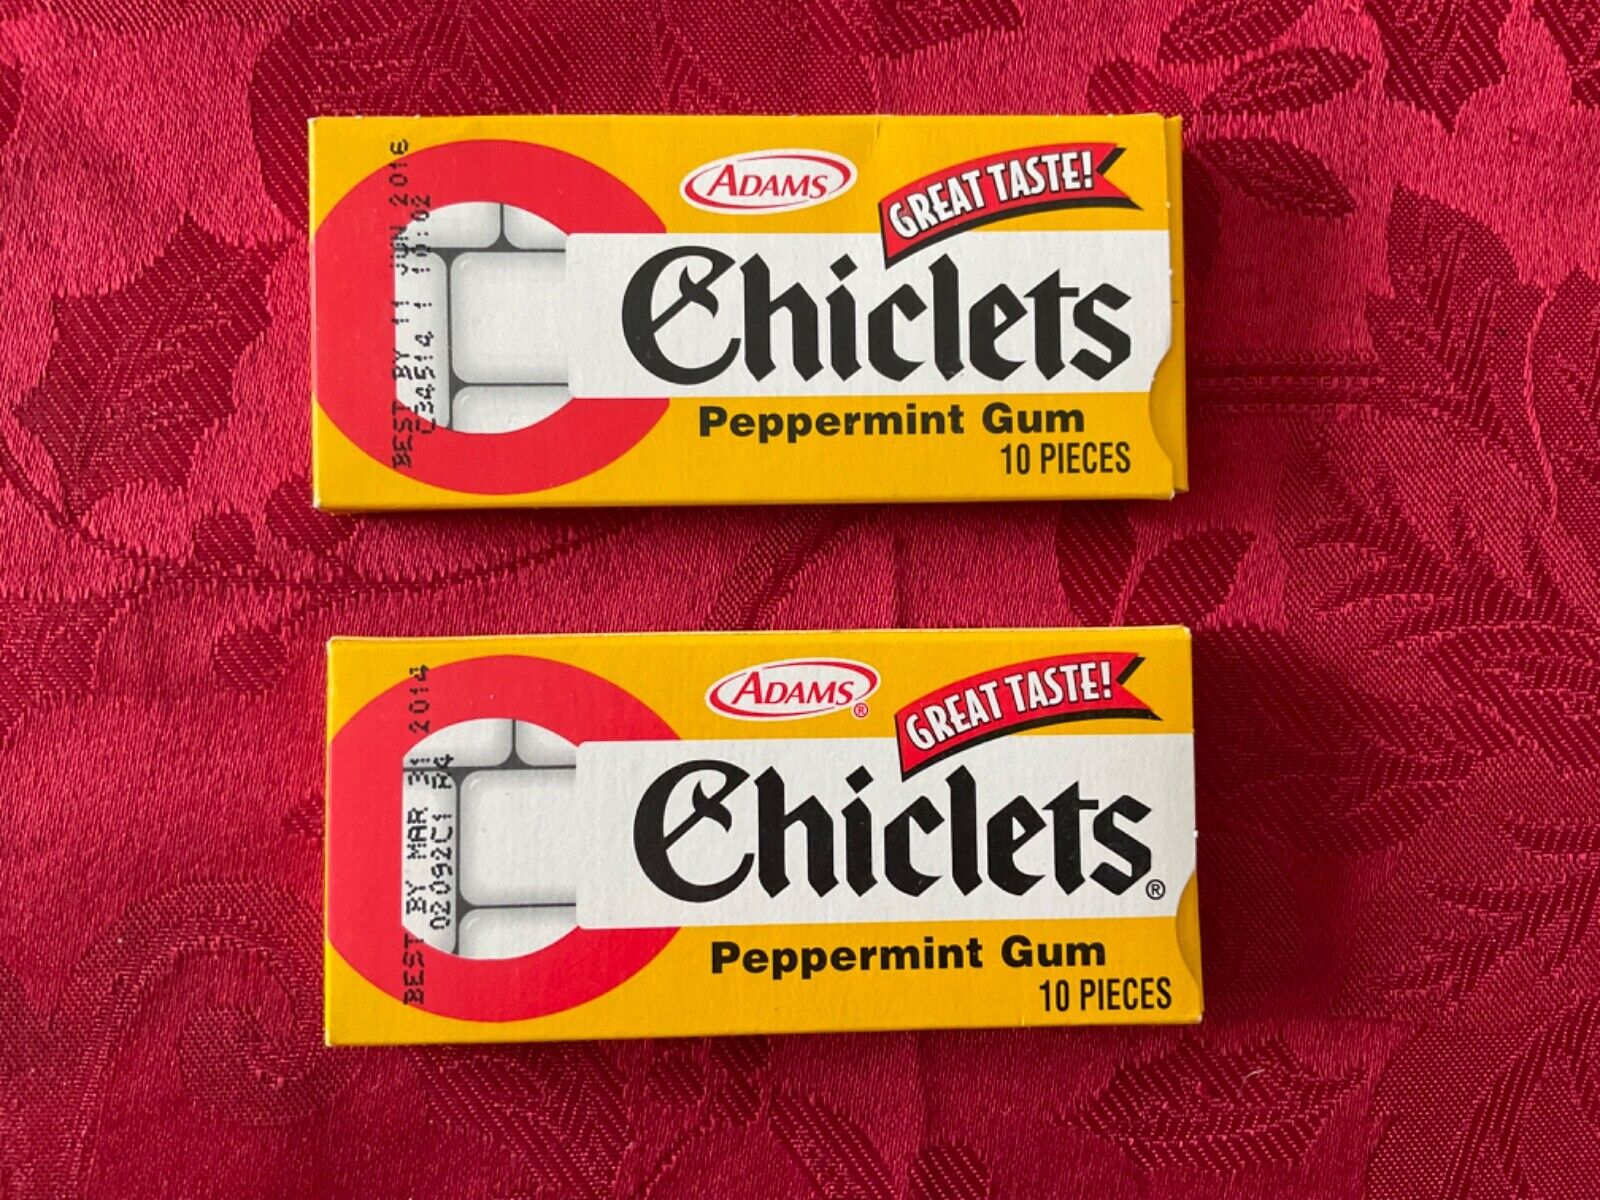 2 VINTAGE BOXES OF ADAMS CHICLETS PEPPERMINT GUM - 10 PIECES